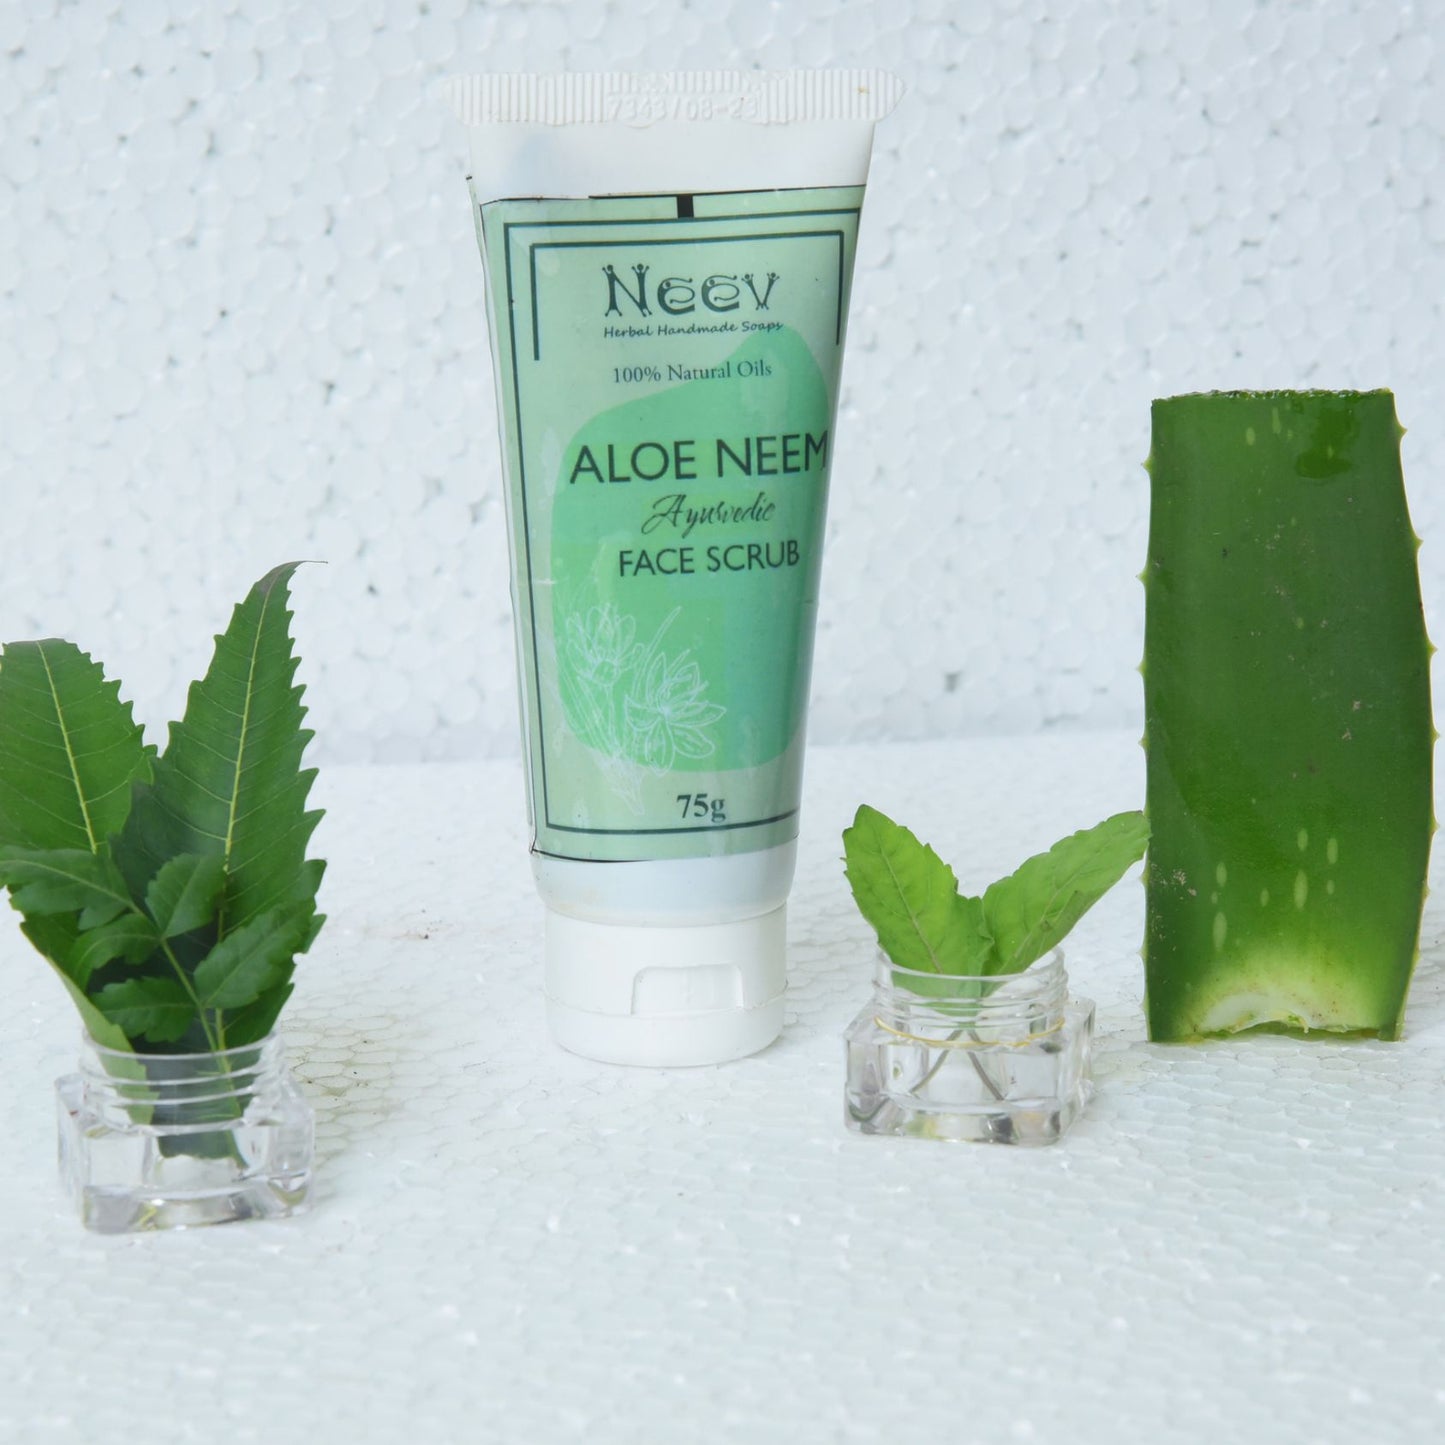 Aloe Neem Face Scrub - For Acne Prone Skin